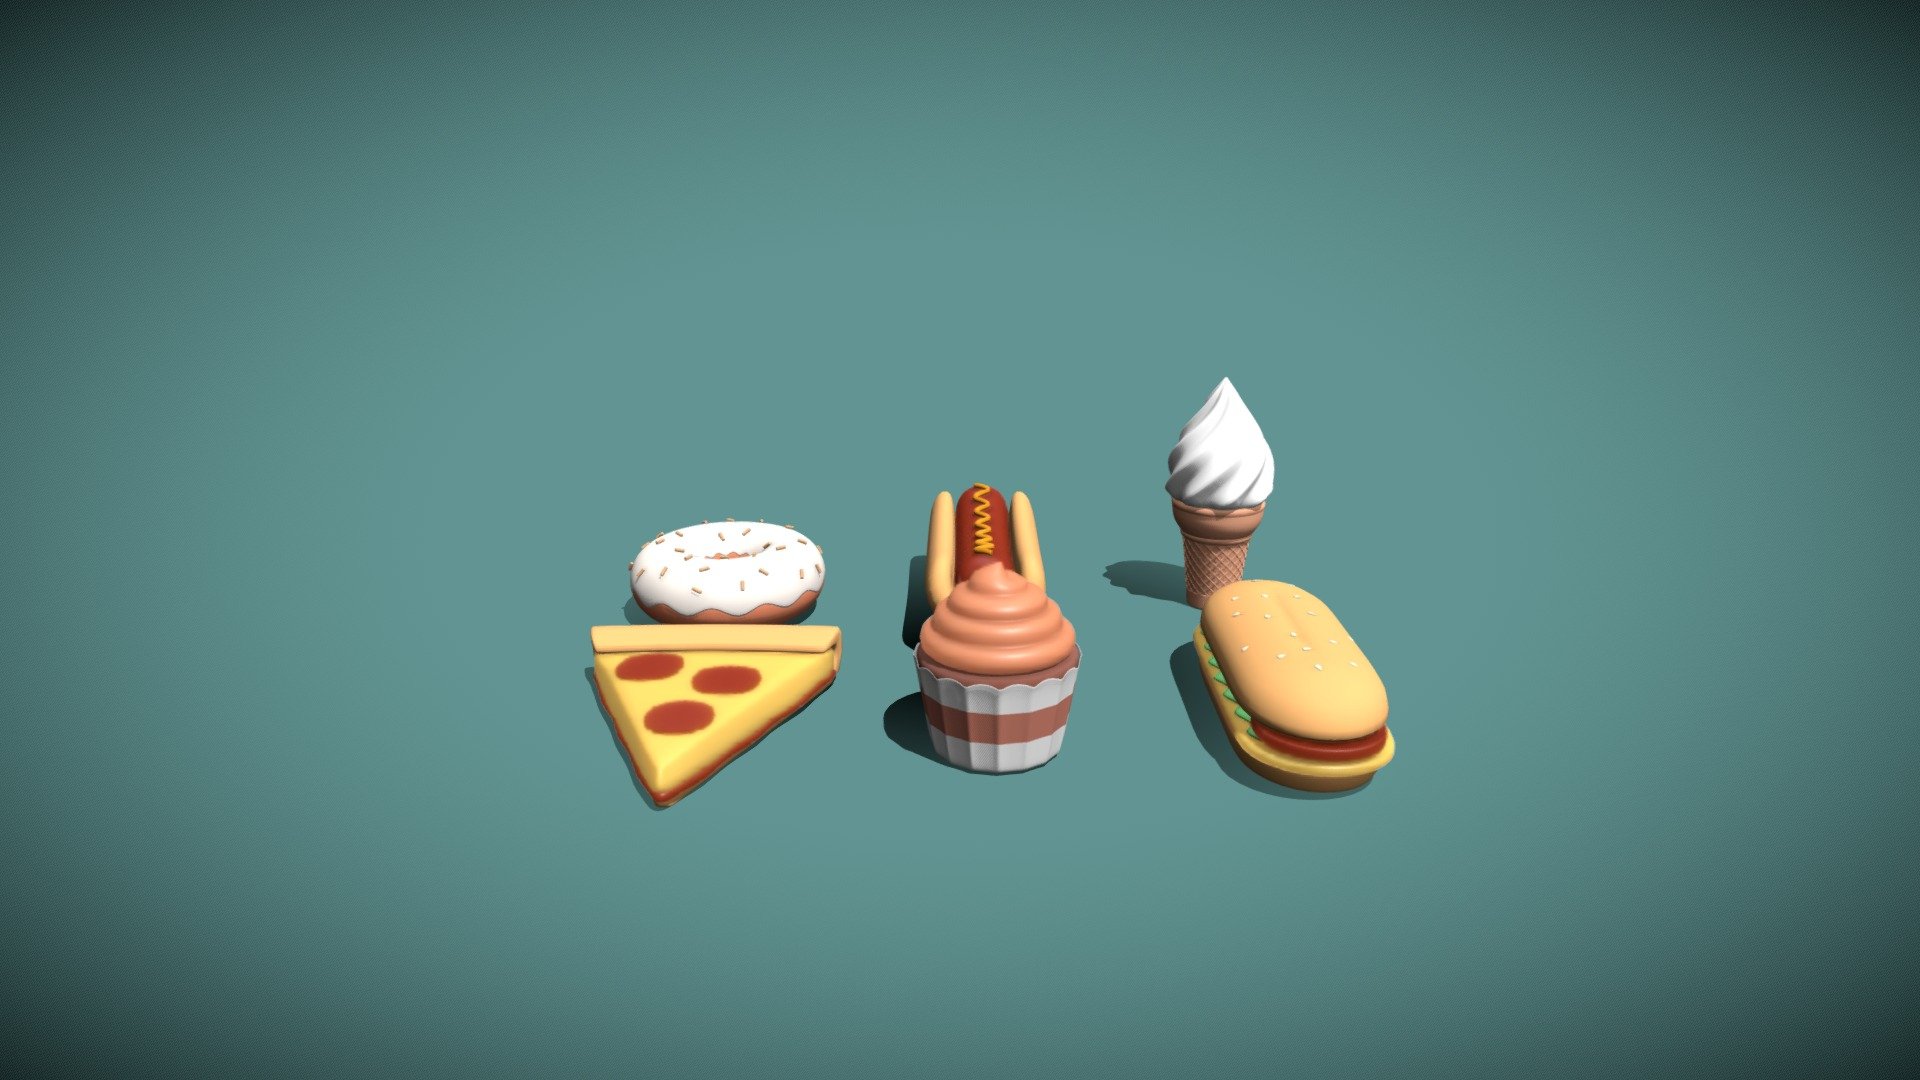 6 Cartoon/emoji food models: Pizza slice, hotdog, sandwich, doughnut, cupcake, icecream.

File formats: FBX, OBJ, Blend - Cartoon food - Buy Royalty Free 3D model by Jacob.Elhatmi 3d model